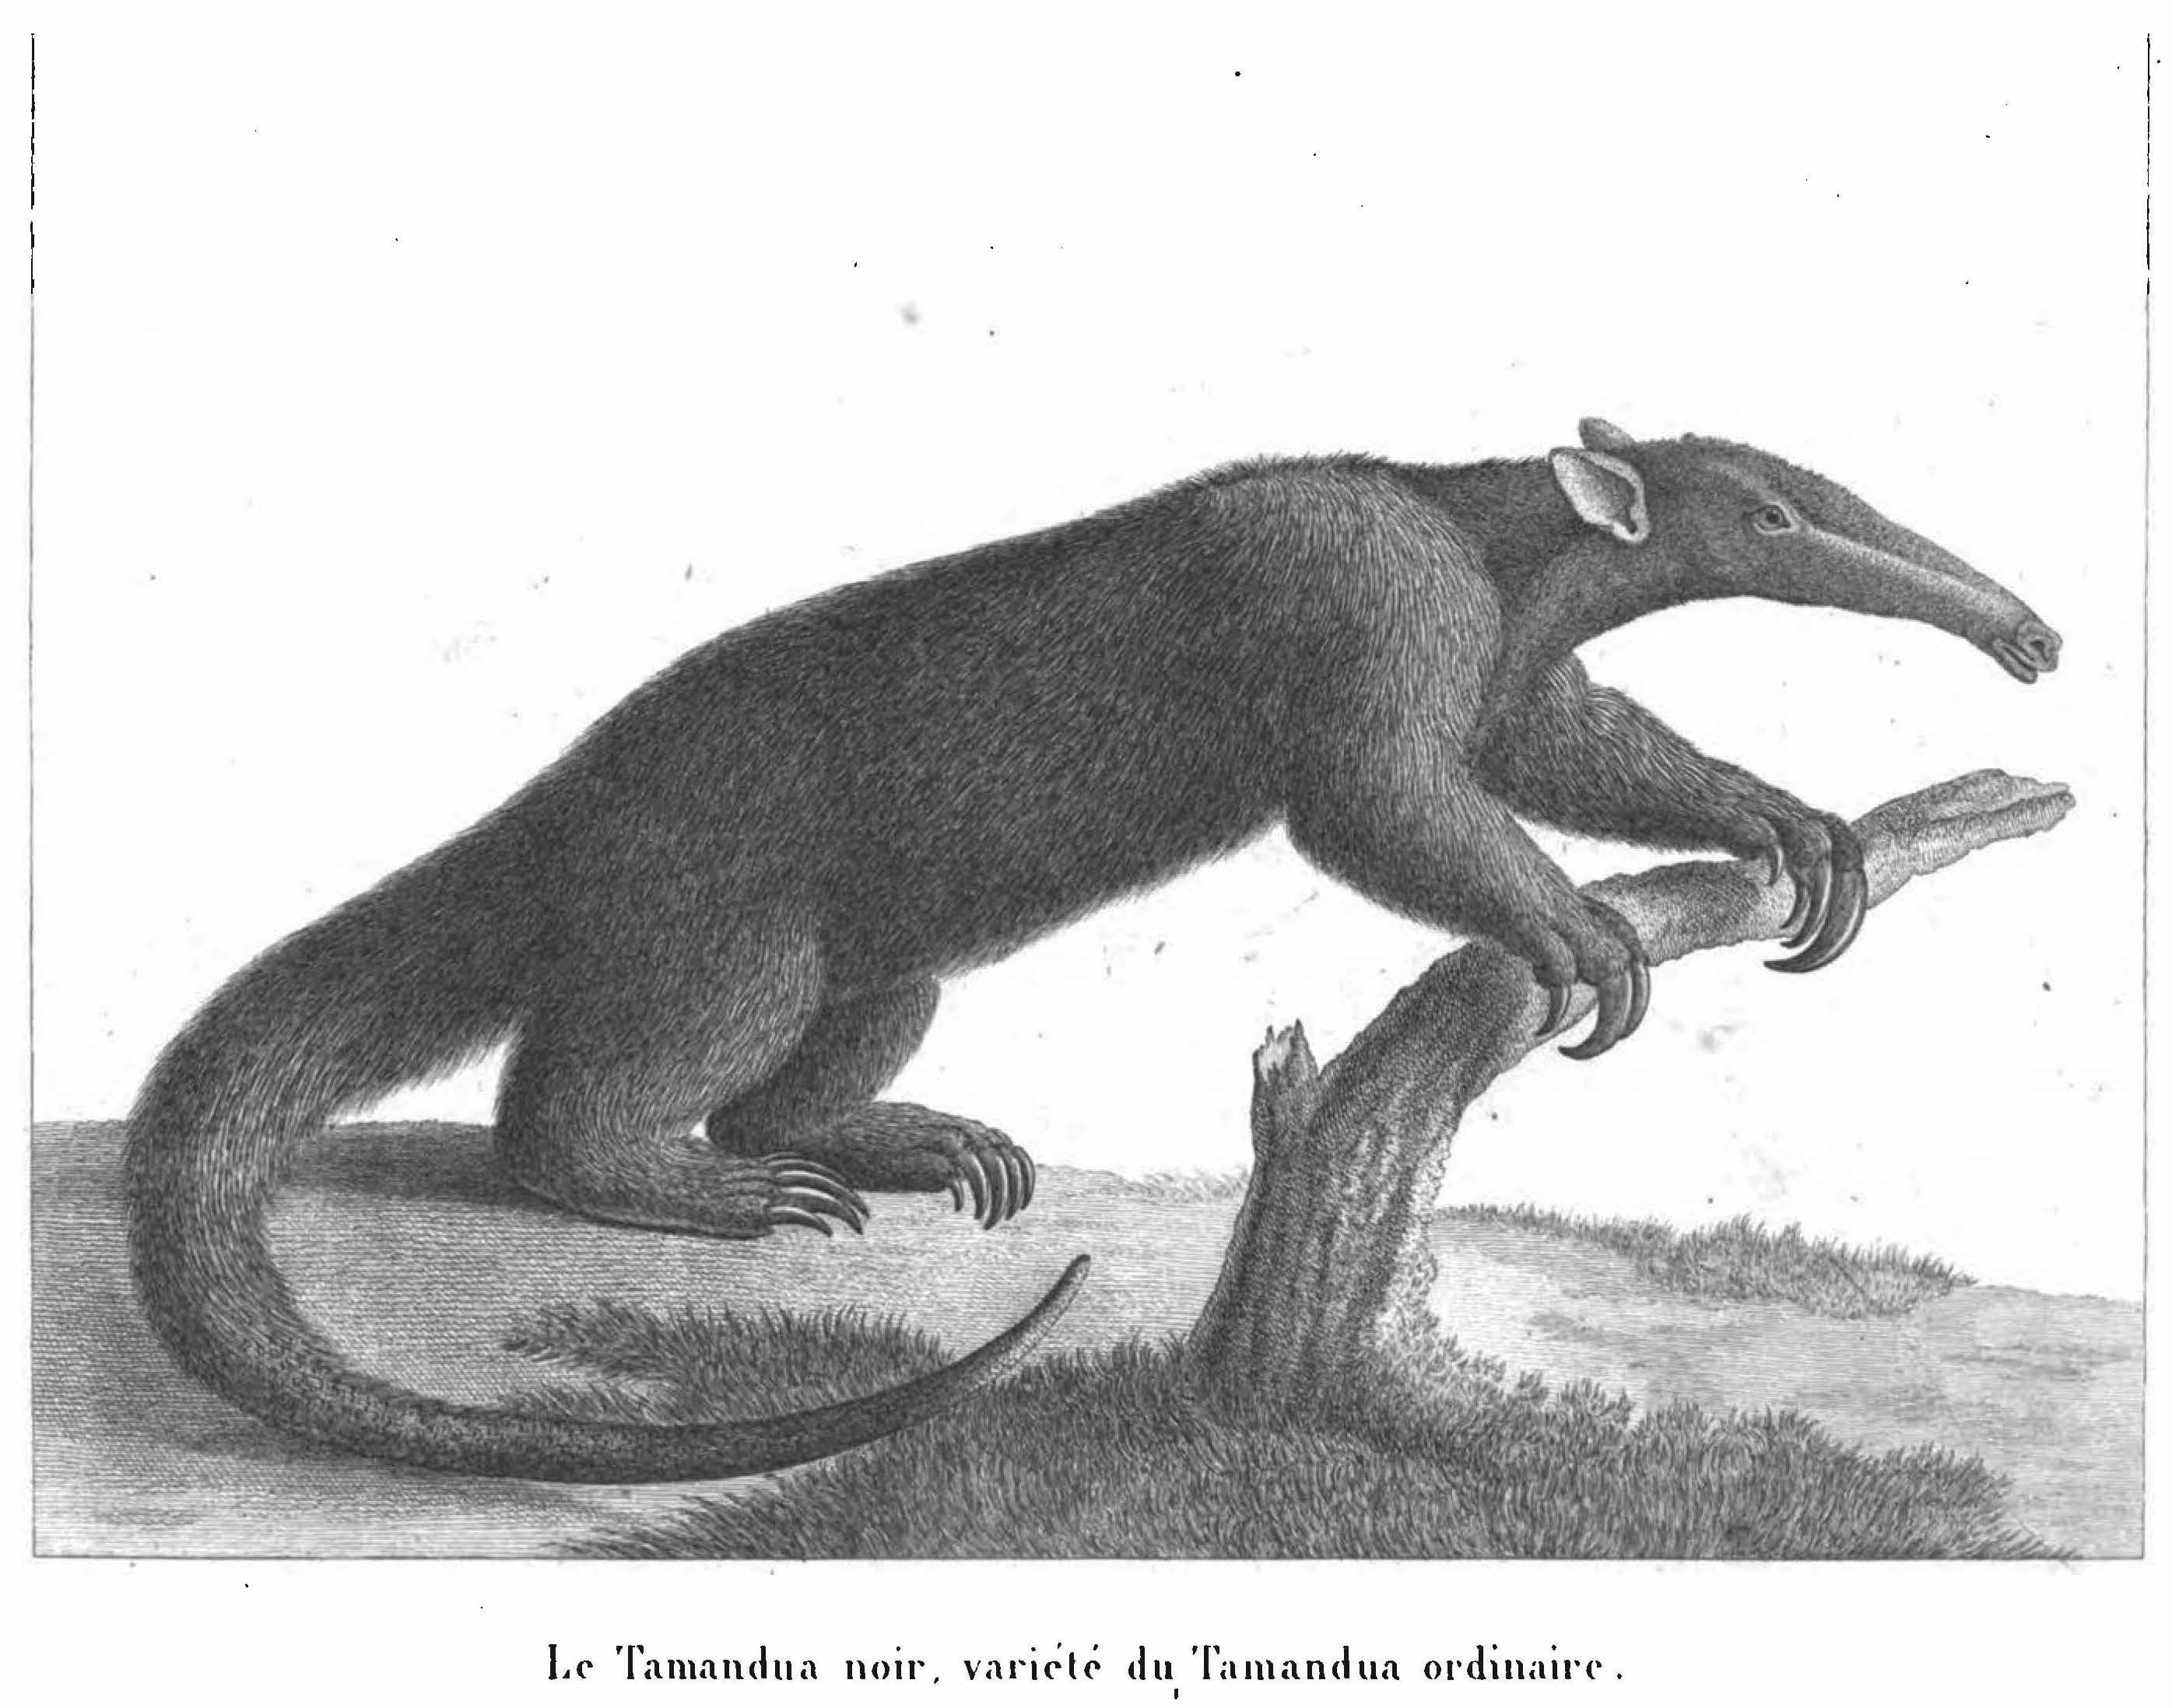 1 Anteater